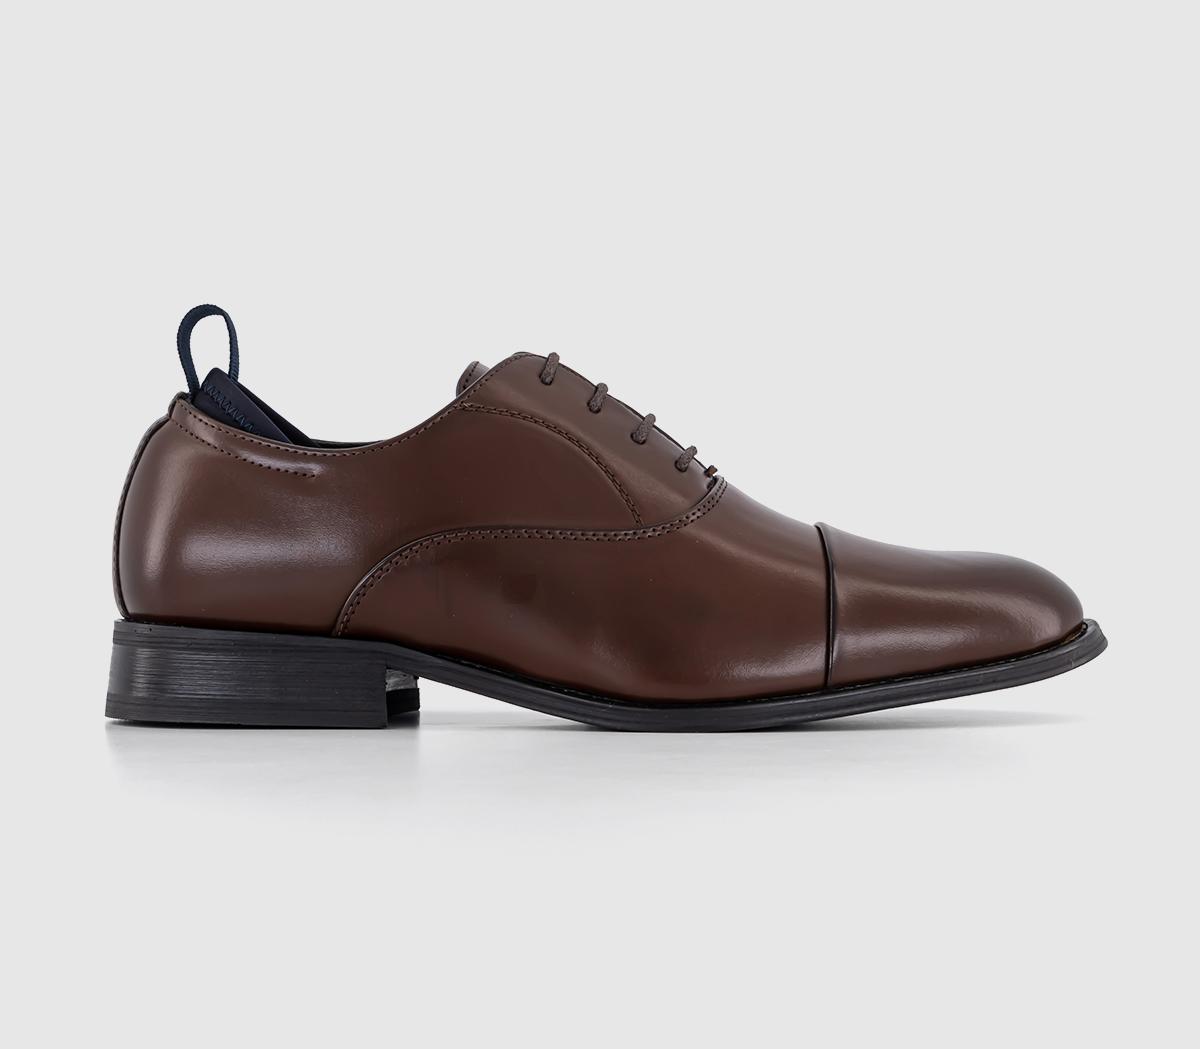 OFFICEMason Neoprene Detail Comfort Oxford ShoesChocolate